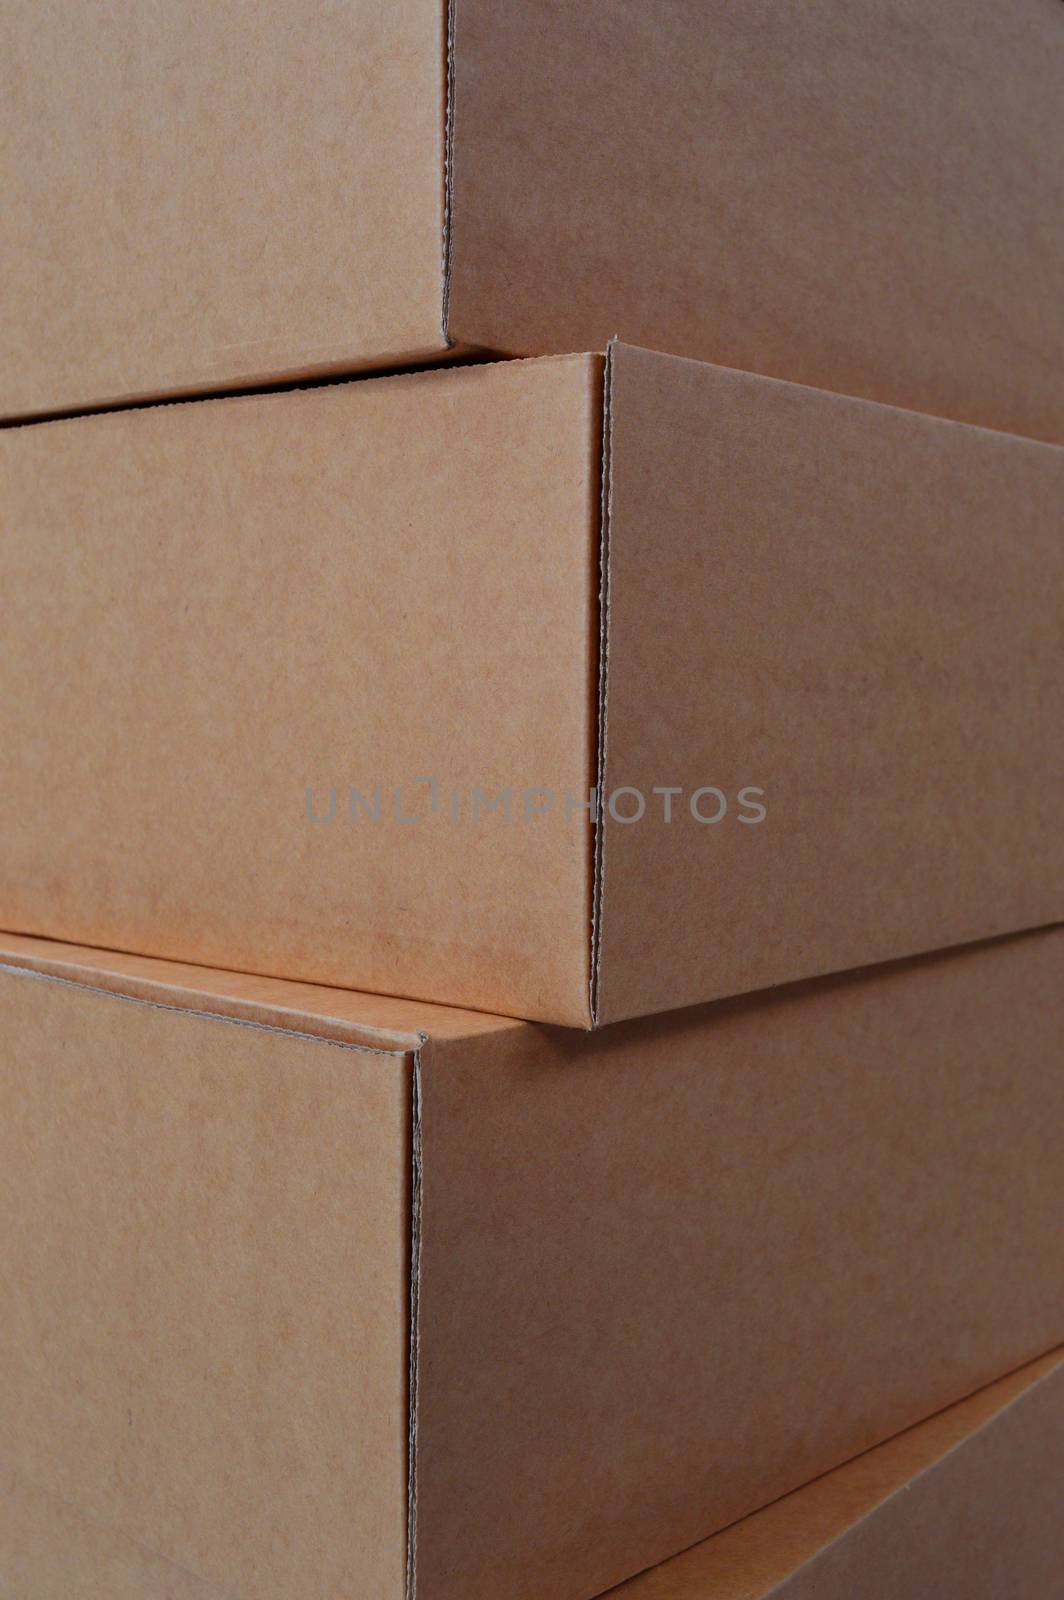 Cardboard box stack by megnomad